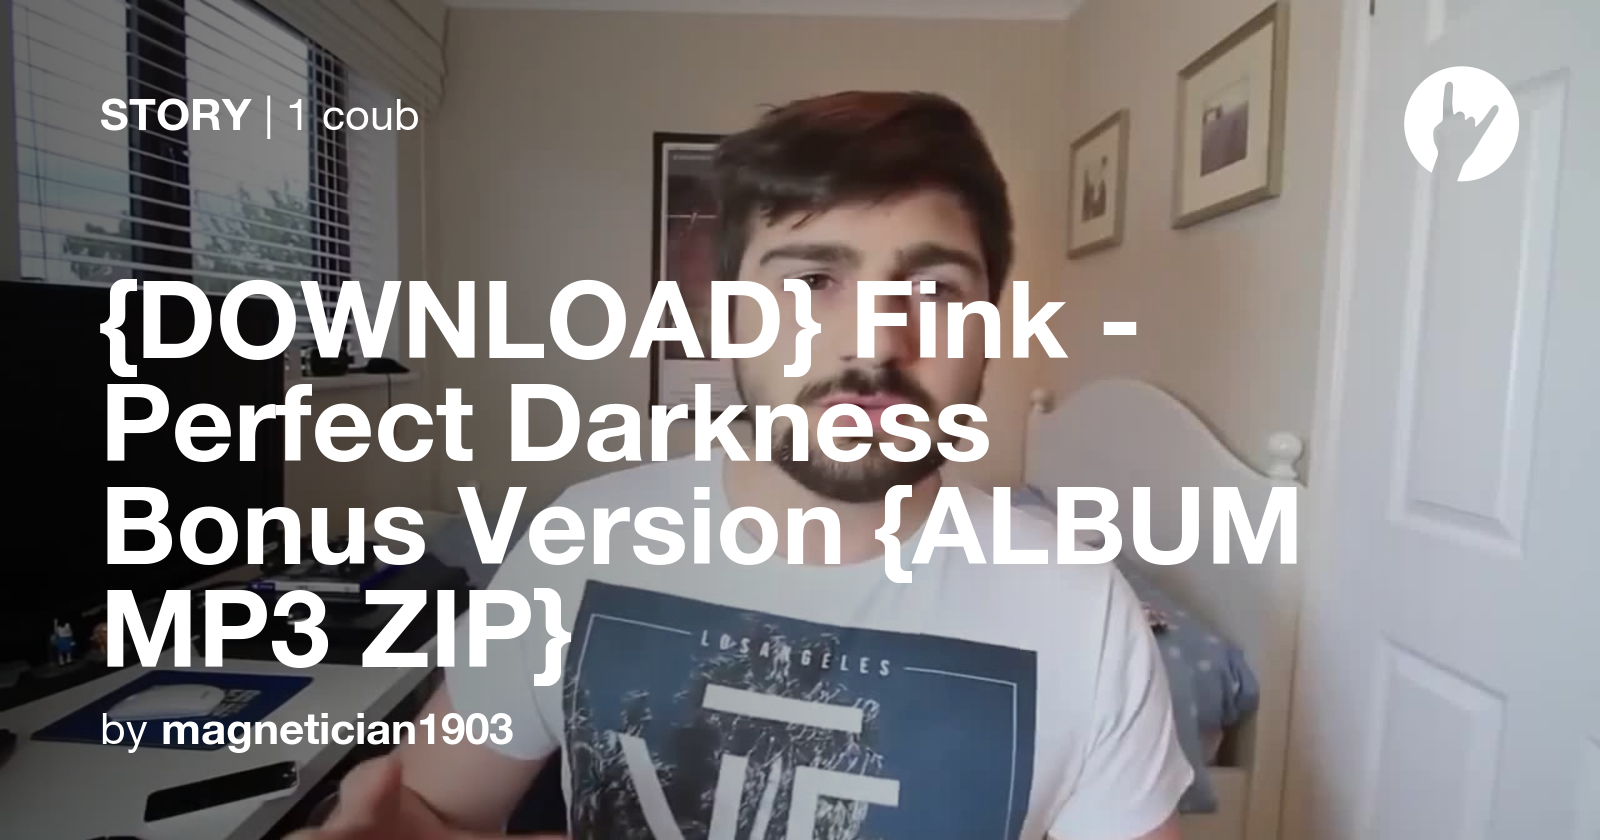 fink perfect darkness album download